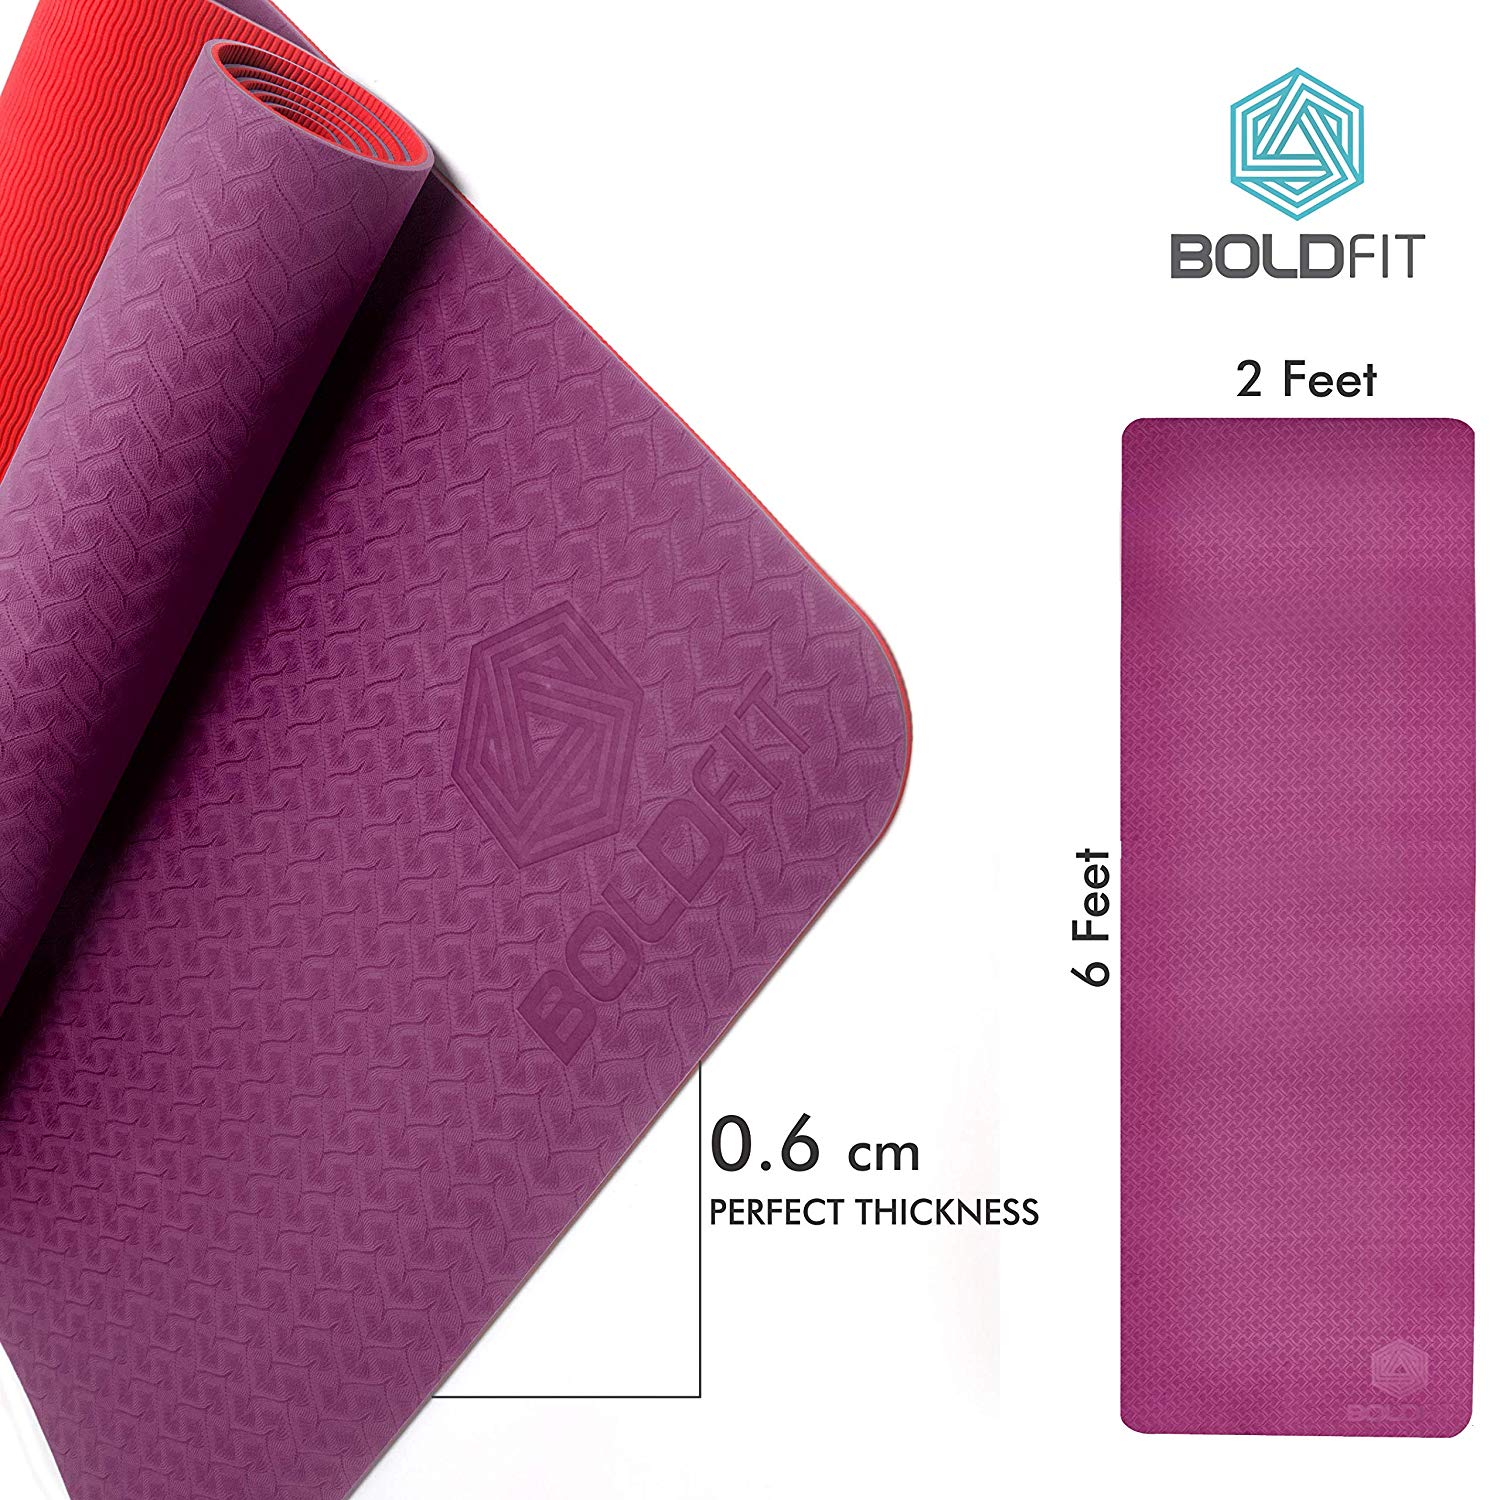 Boldfit Yoga Mats - Buy Boldfit Yoga Mats online in India